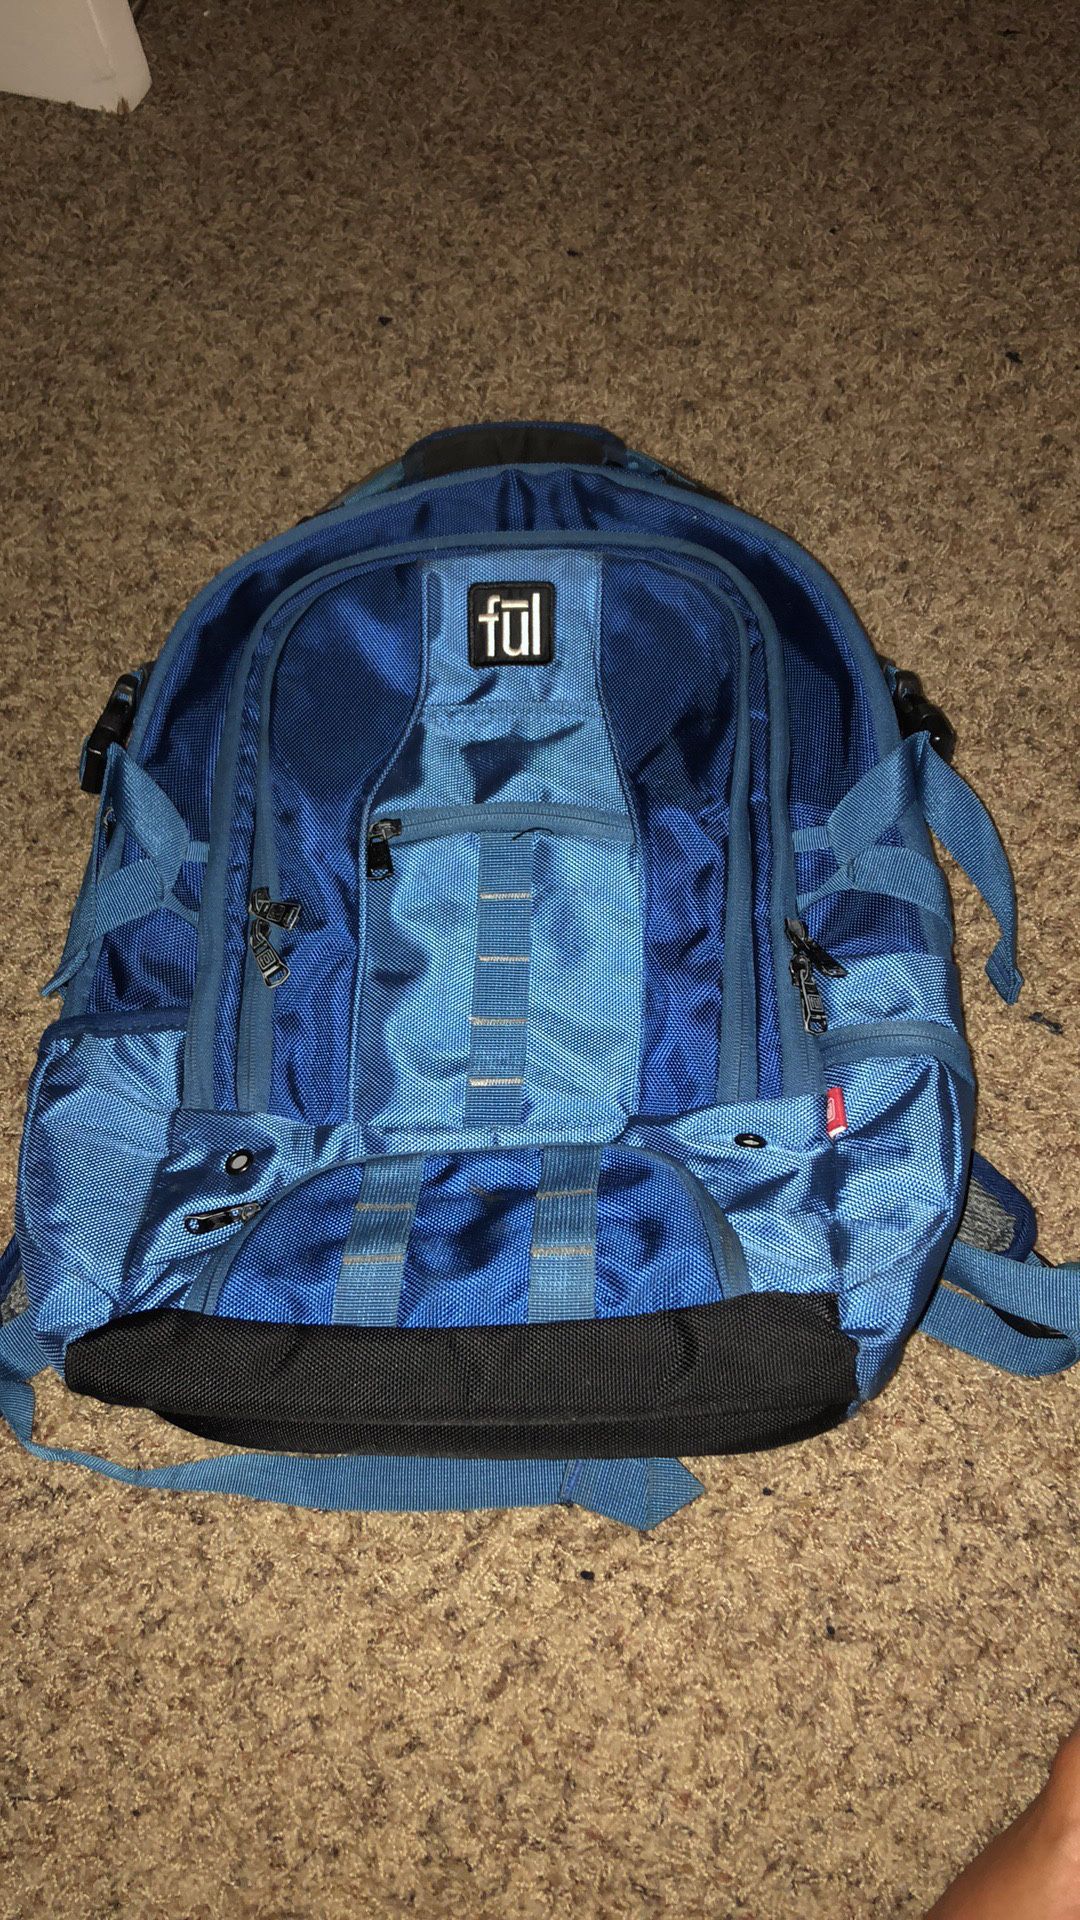 fūl computer backpack